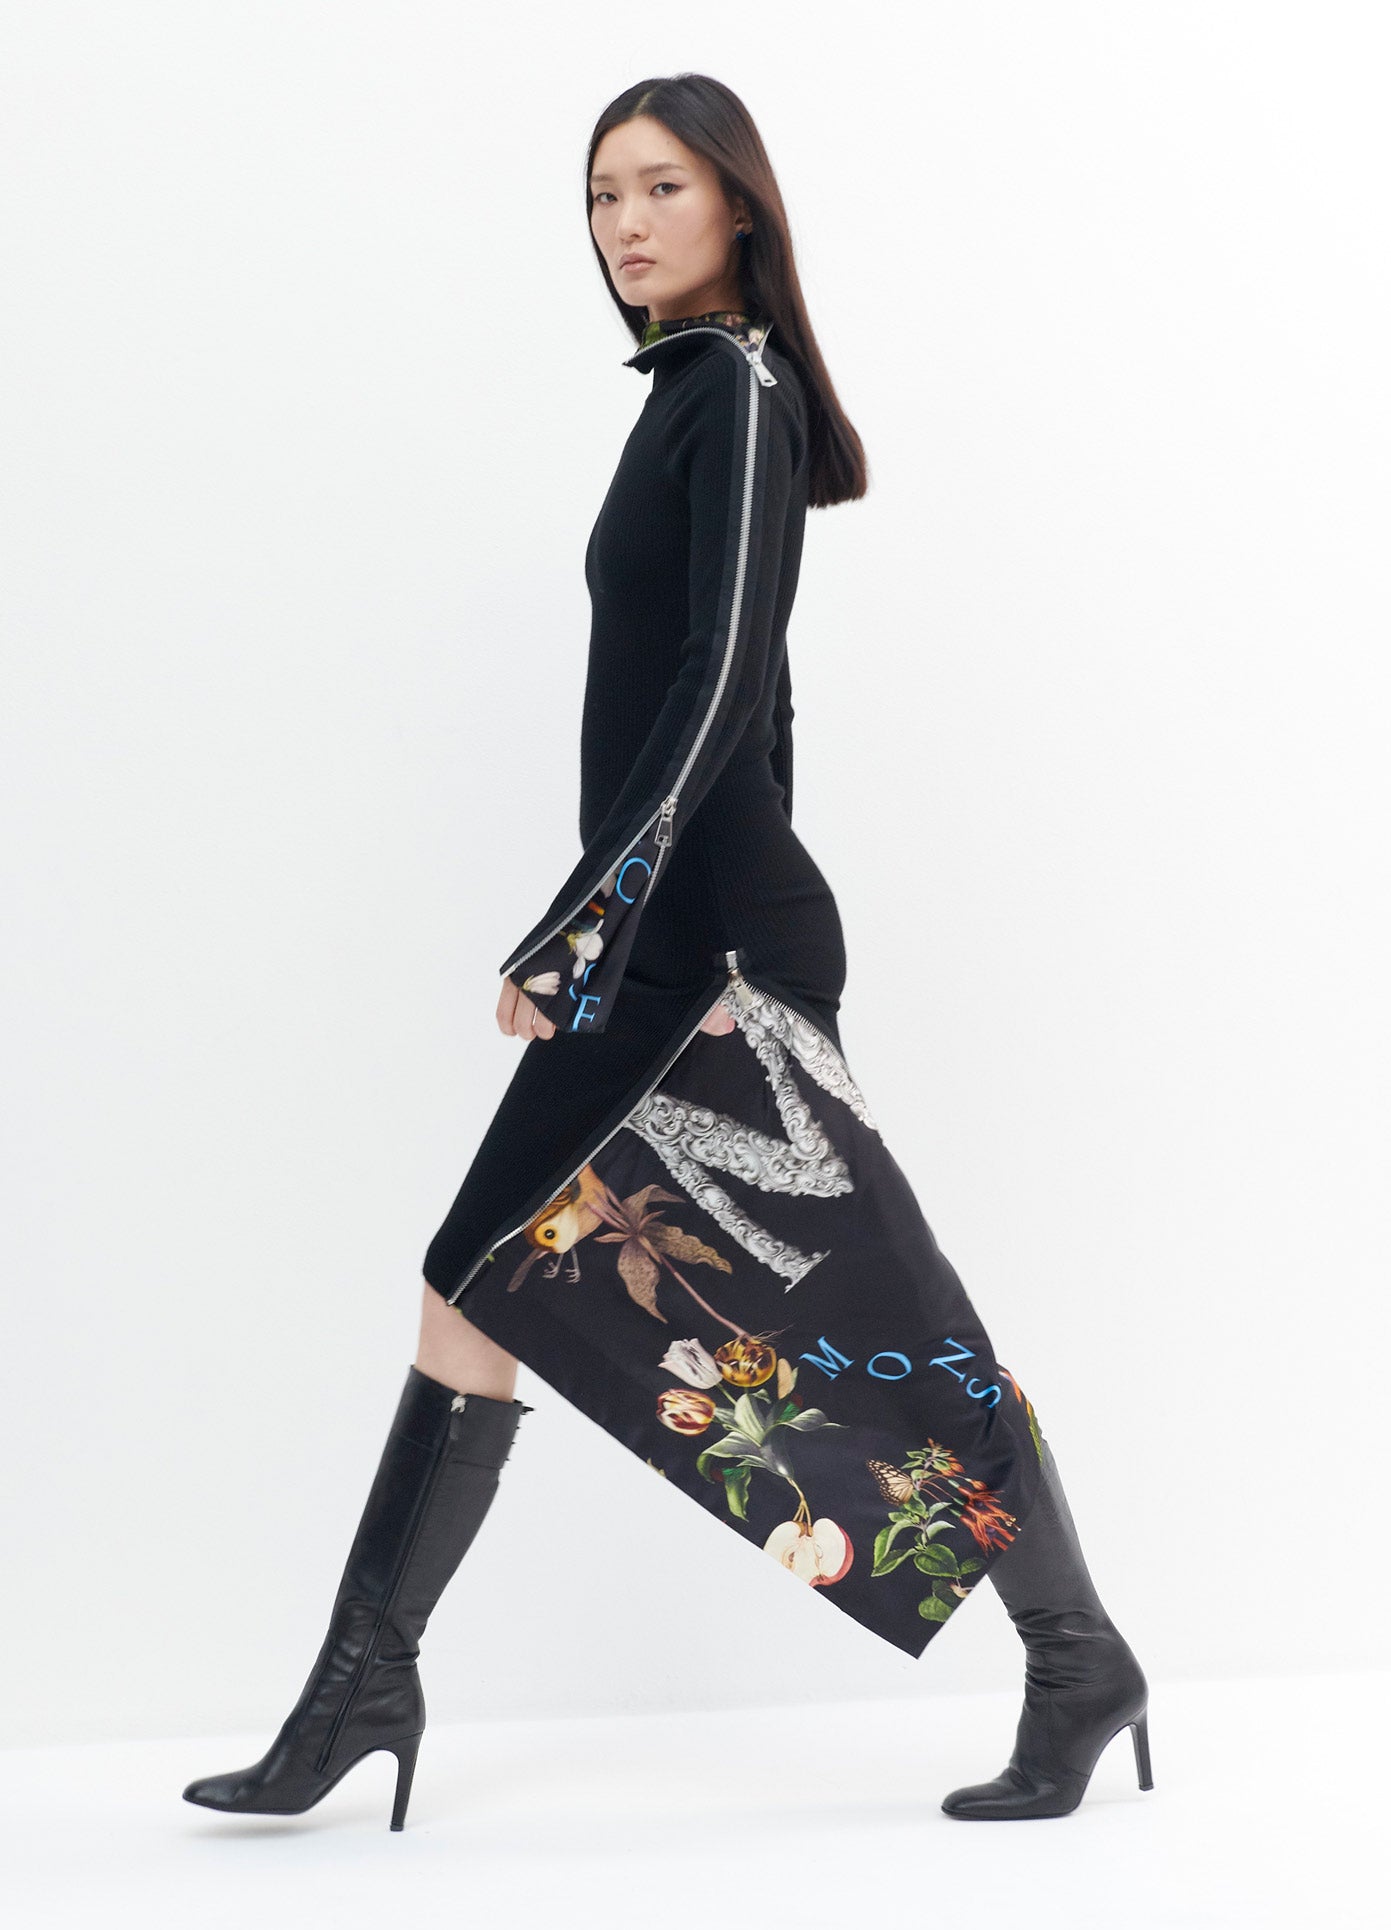 MONSE Long Sleeve Print Inset Zipper Detail Turtleneck Dress in Black Print on Model Walking Left Side View